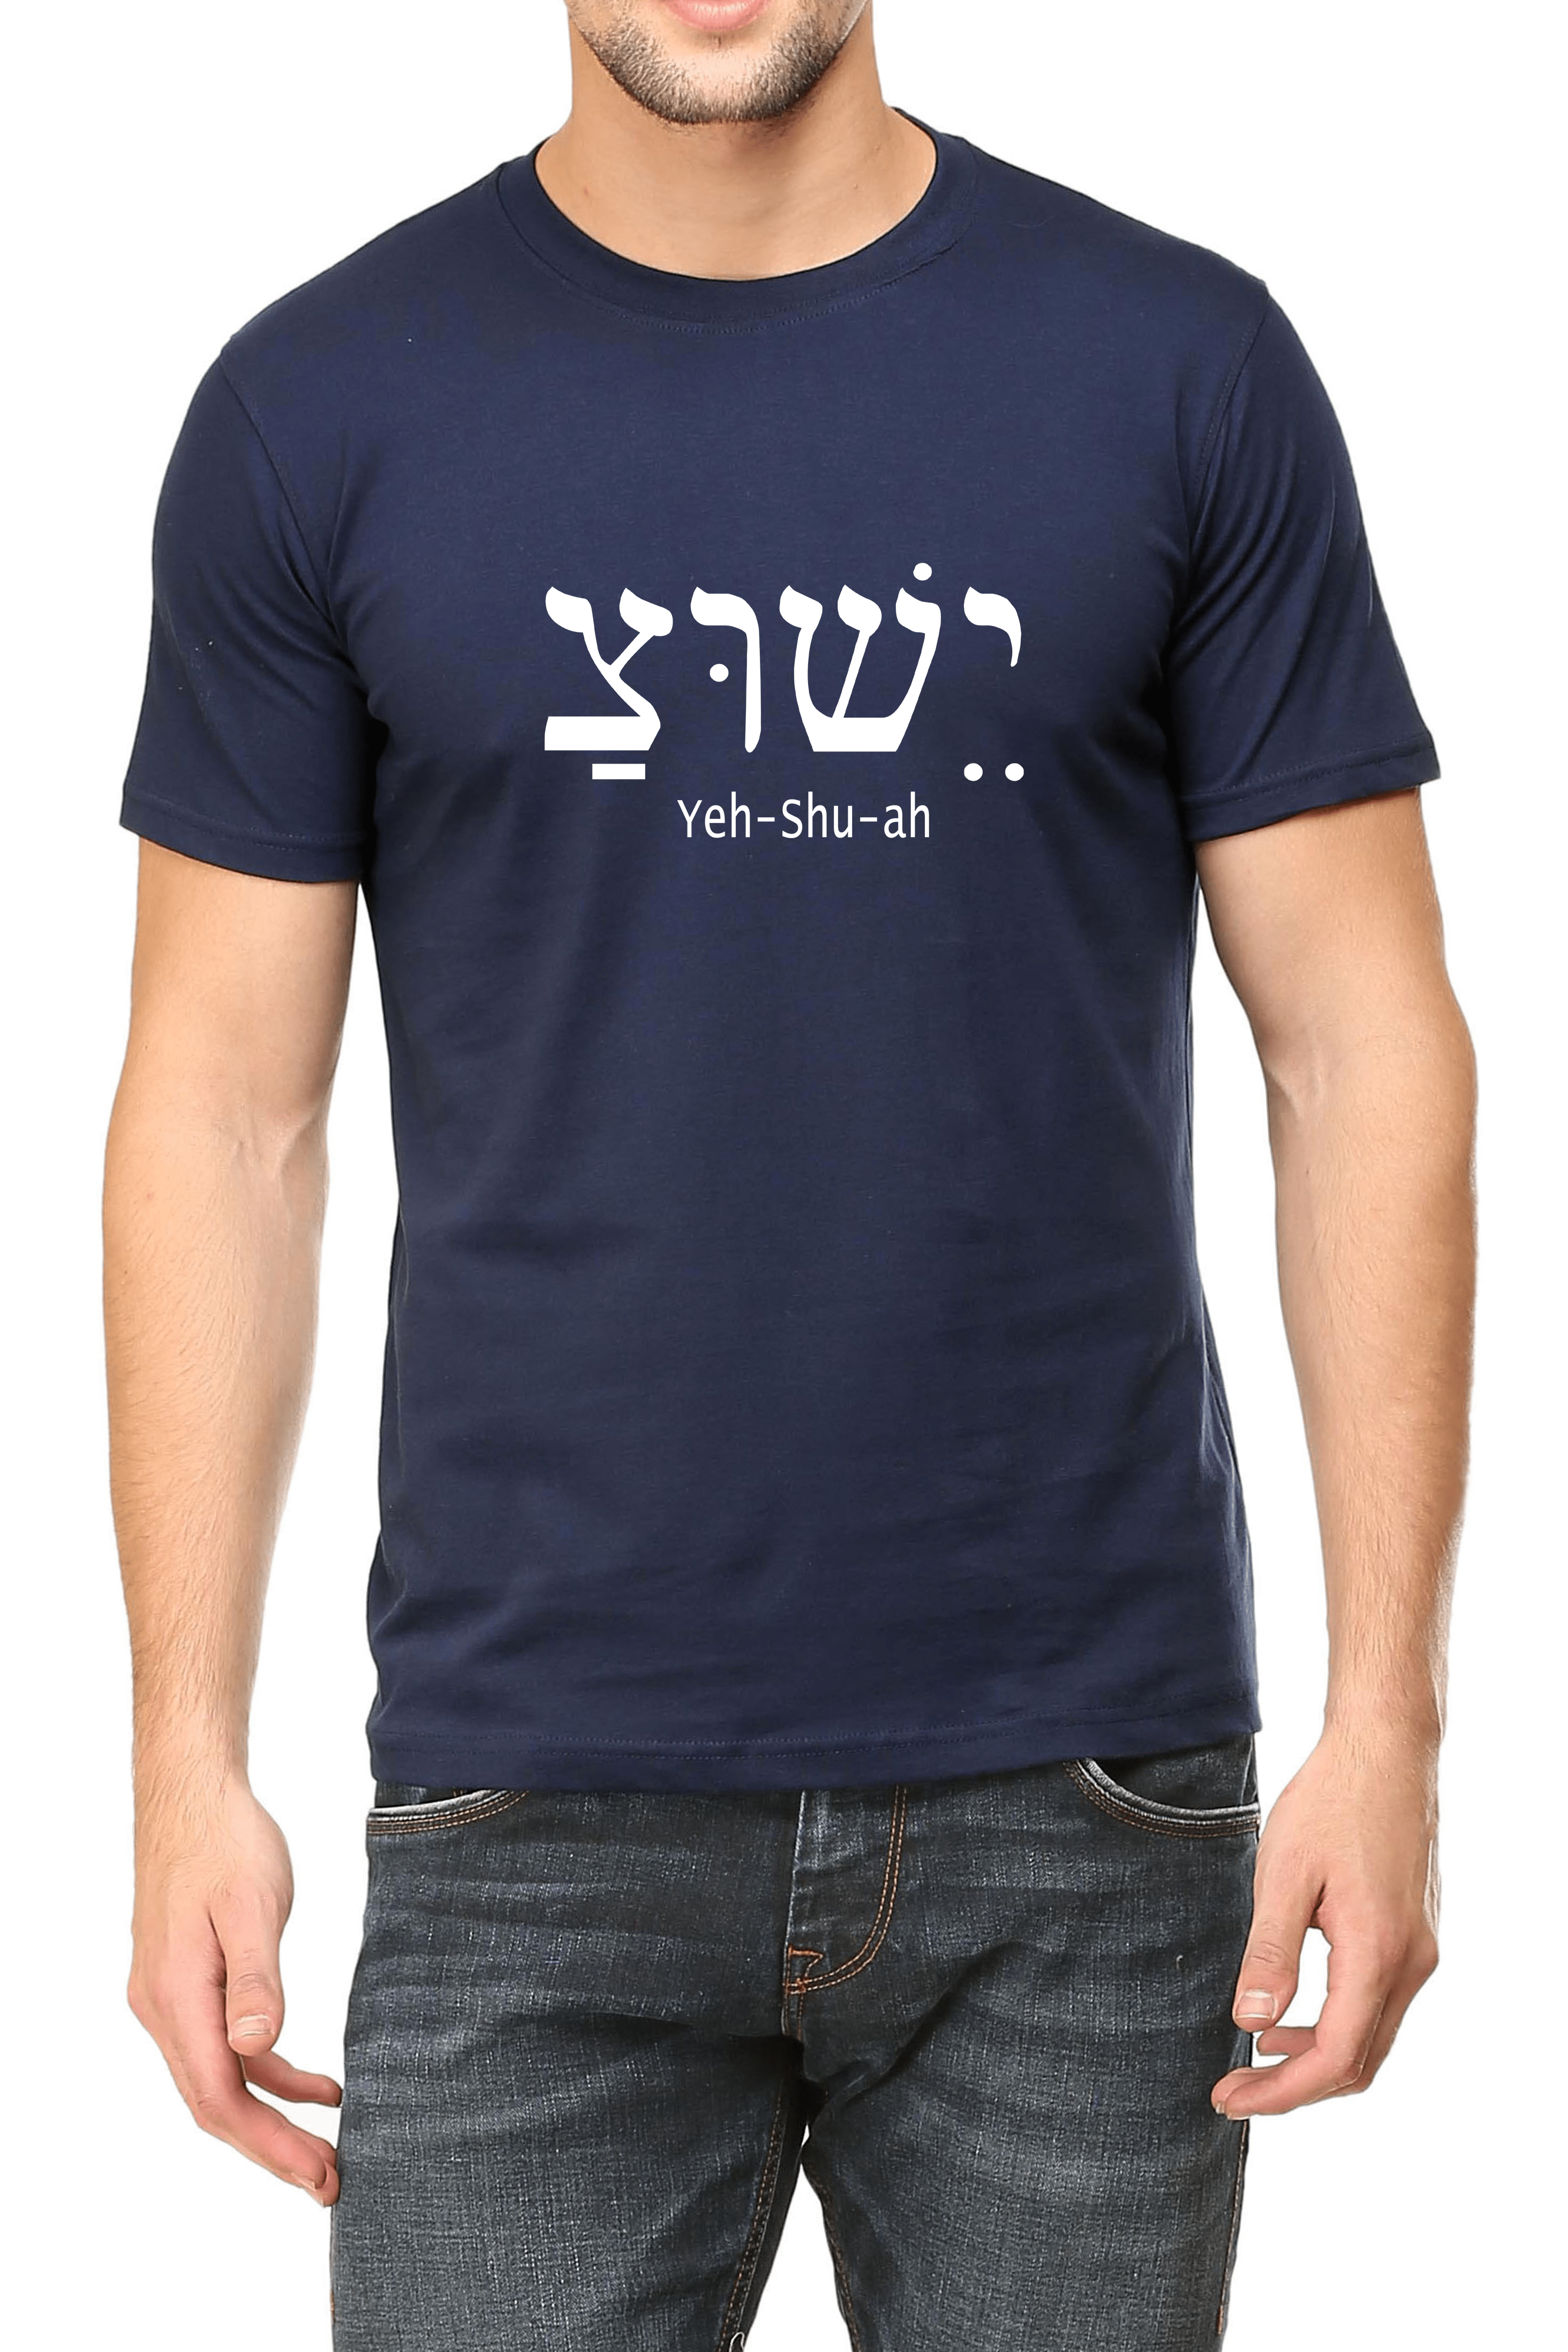 Living Words Men Round Neck T Shirt S / Navy Blue Jesus (Yehshuah) Hebrew - Christian T-Shirt